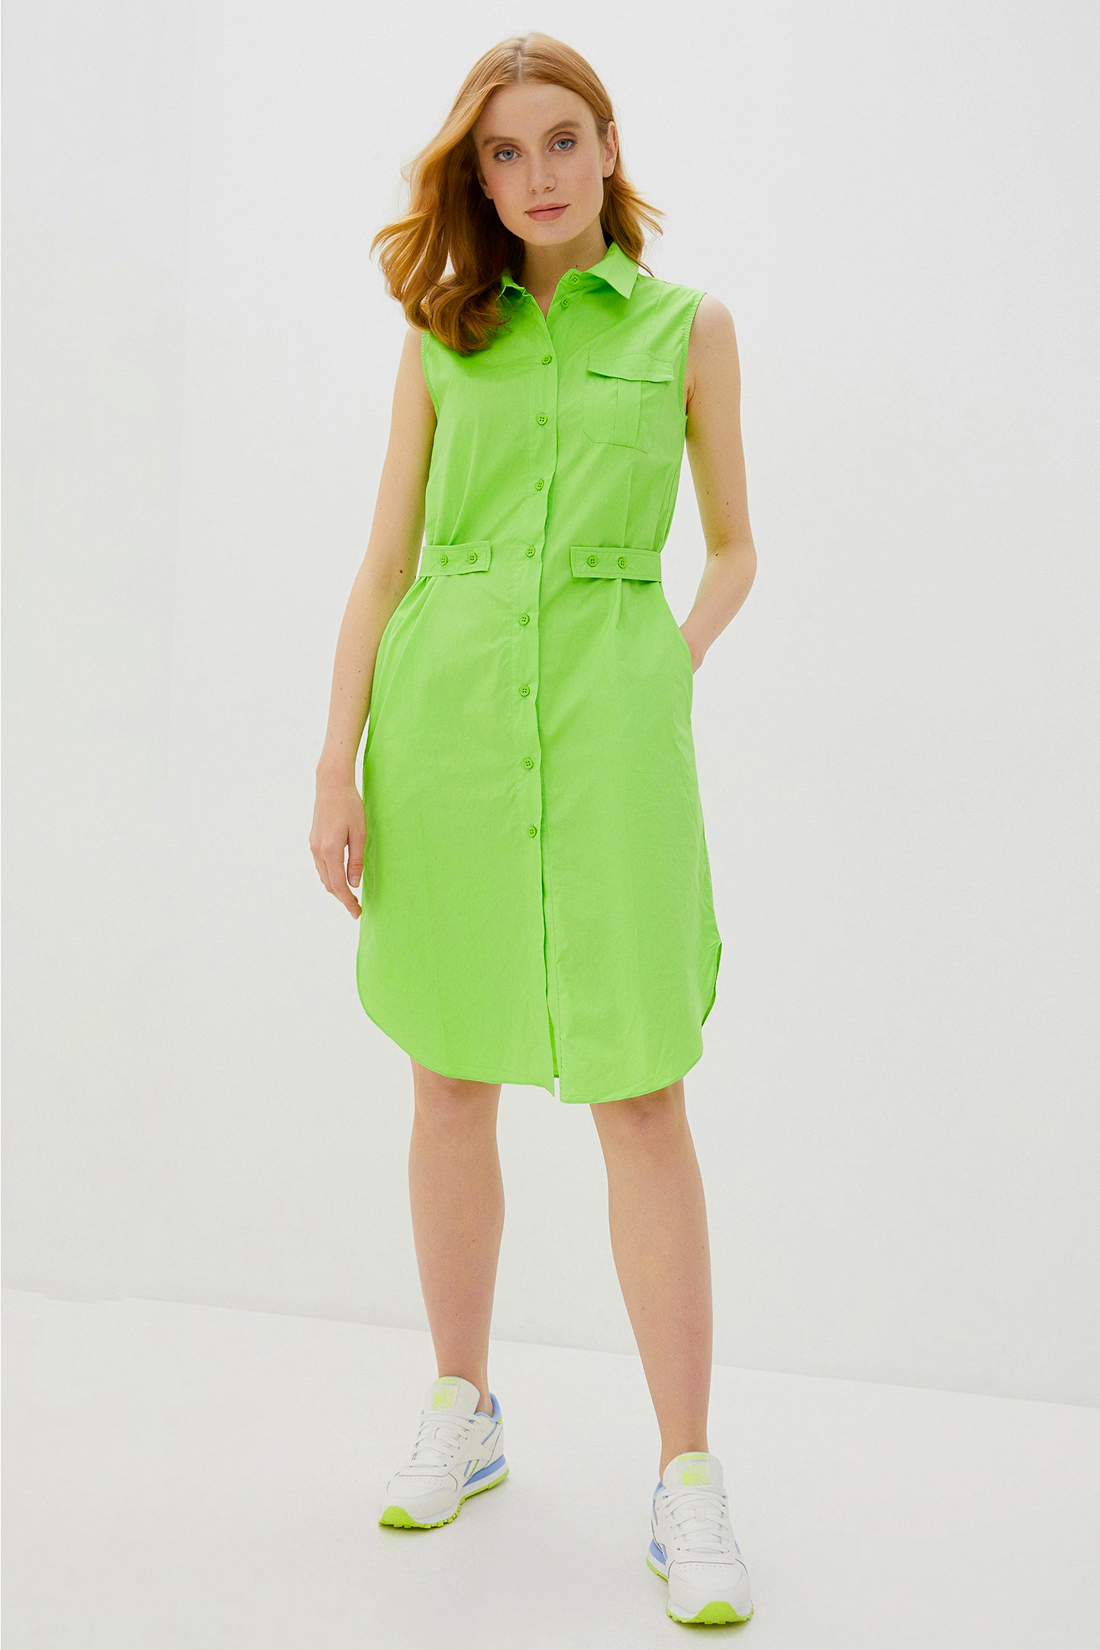 Платье-рубашка без рукавов (арт. baon B450059), размер M, цвет зеленый Платье-рубашка без рукавов (арт. baon B450059) - фото 1